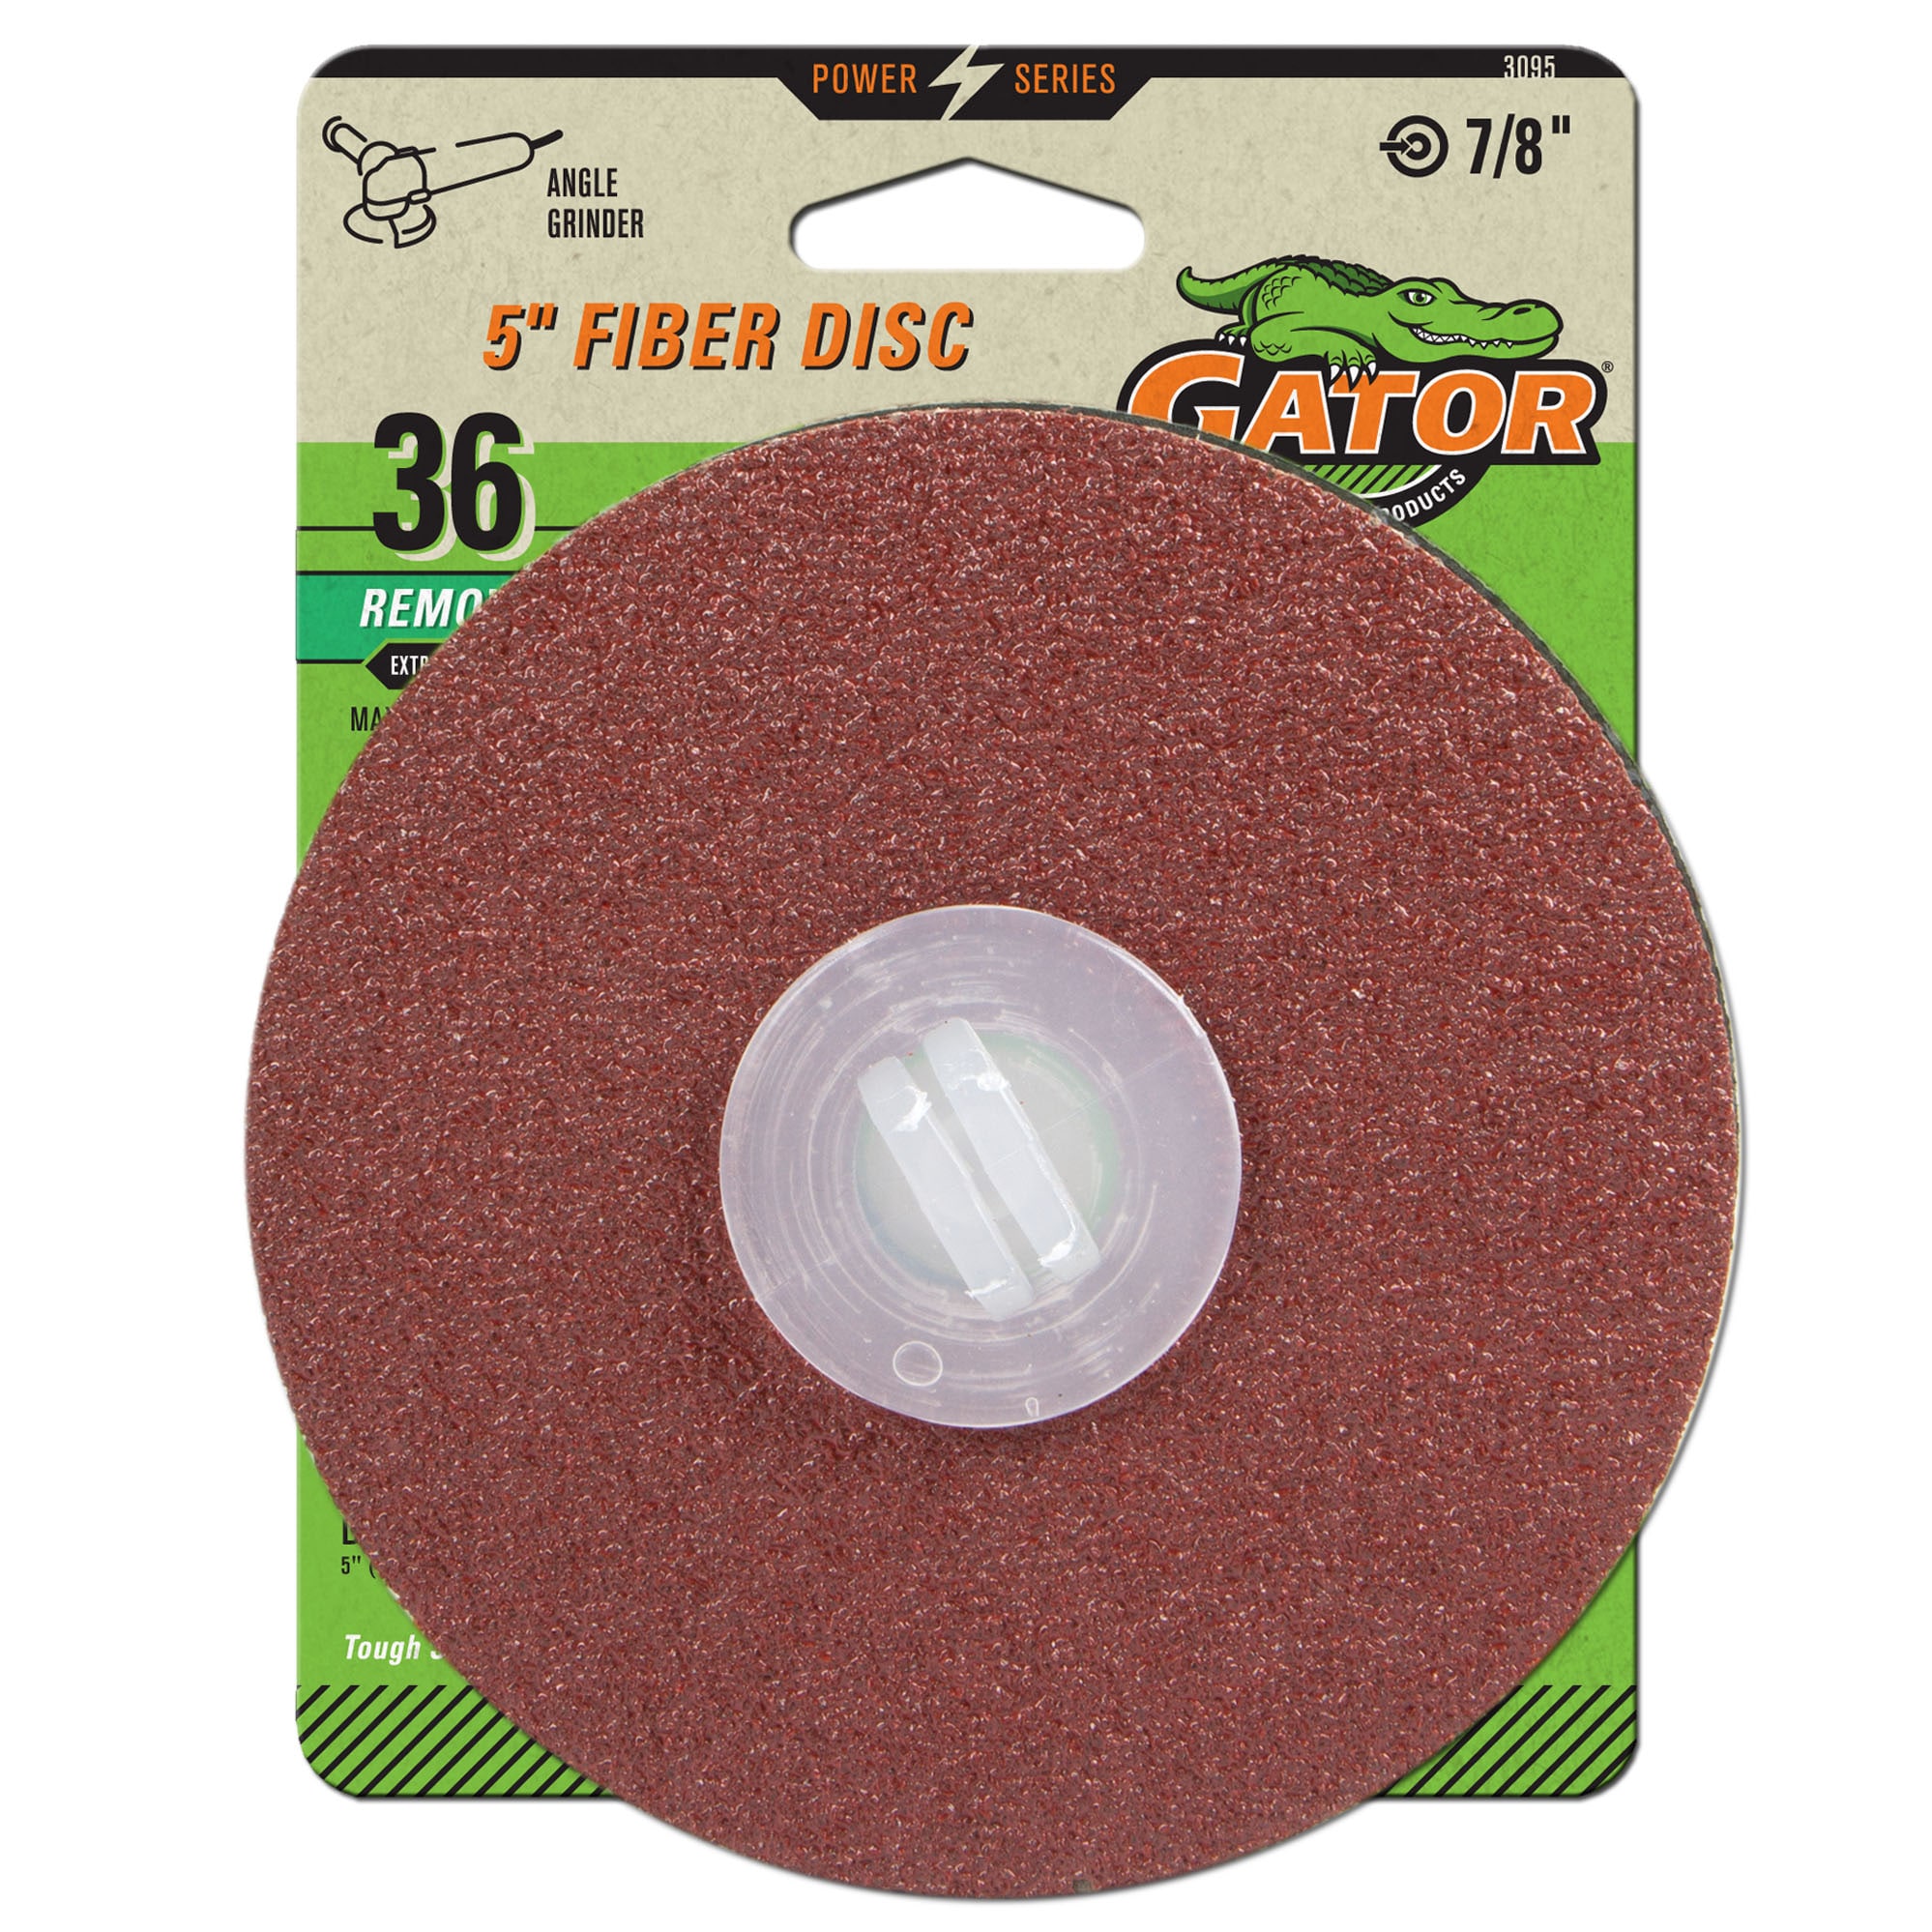 ALI INDUSTRIES Gator Finishing 3063 36 Grit Aluminum Oxide Fiber Discs 3 Pack 4 x 5/8